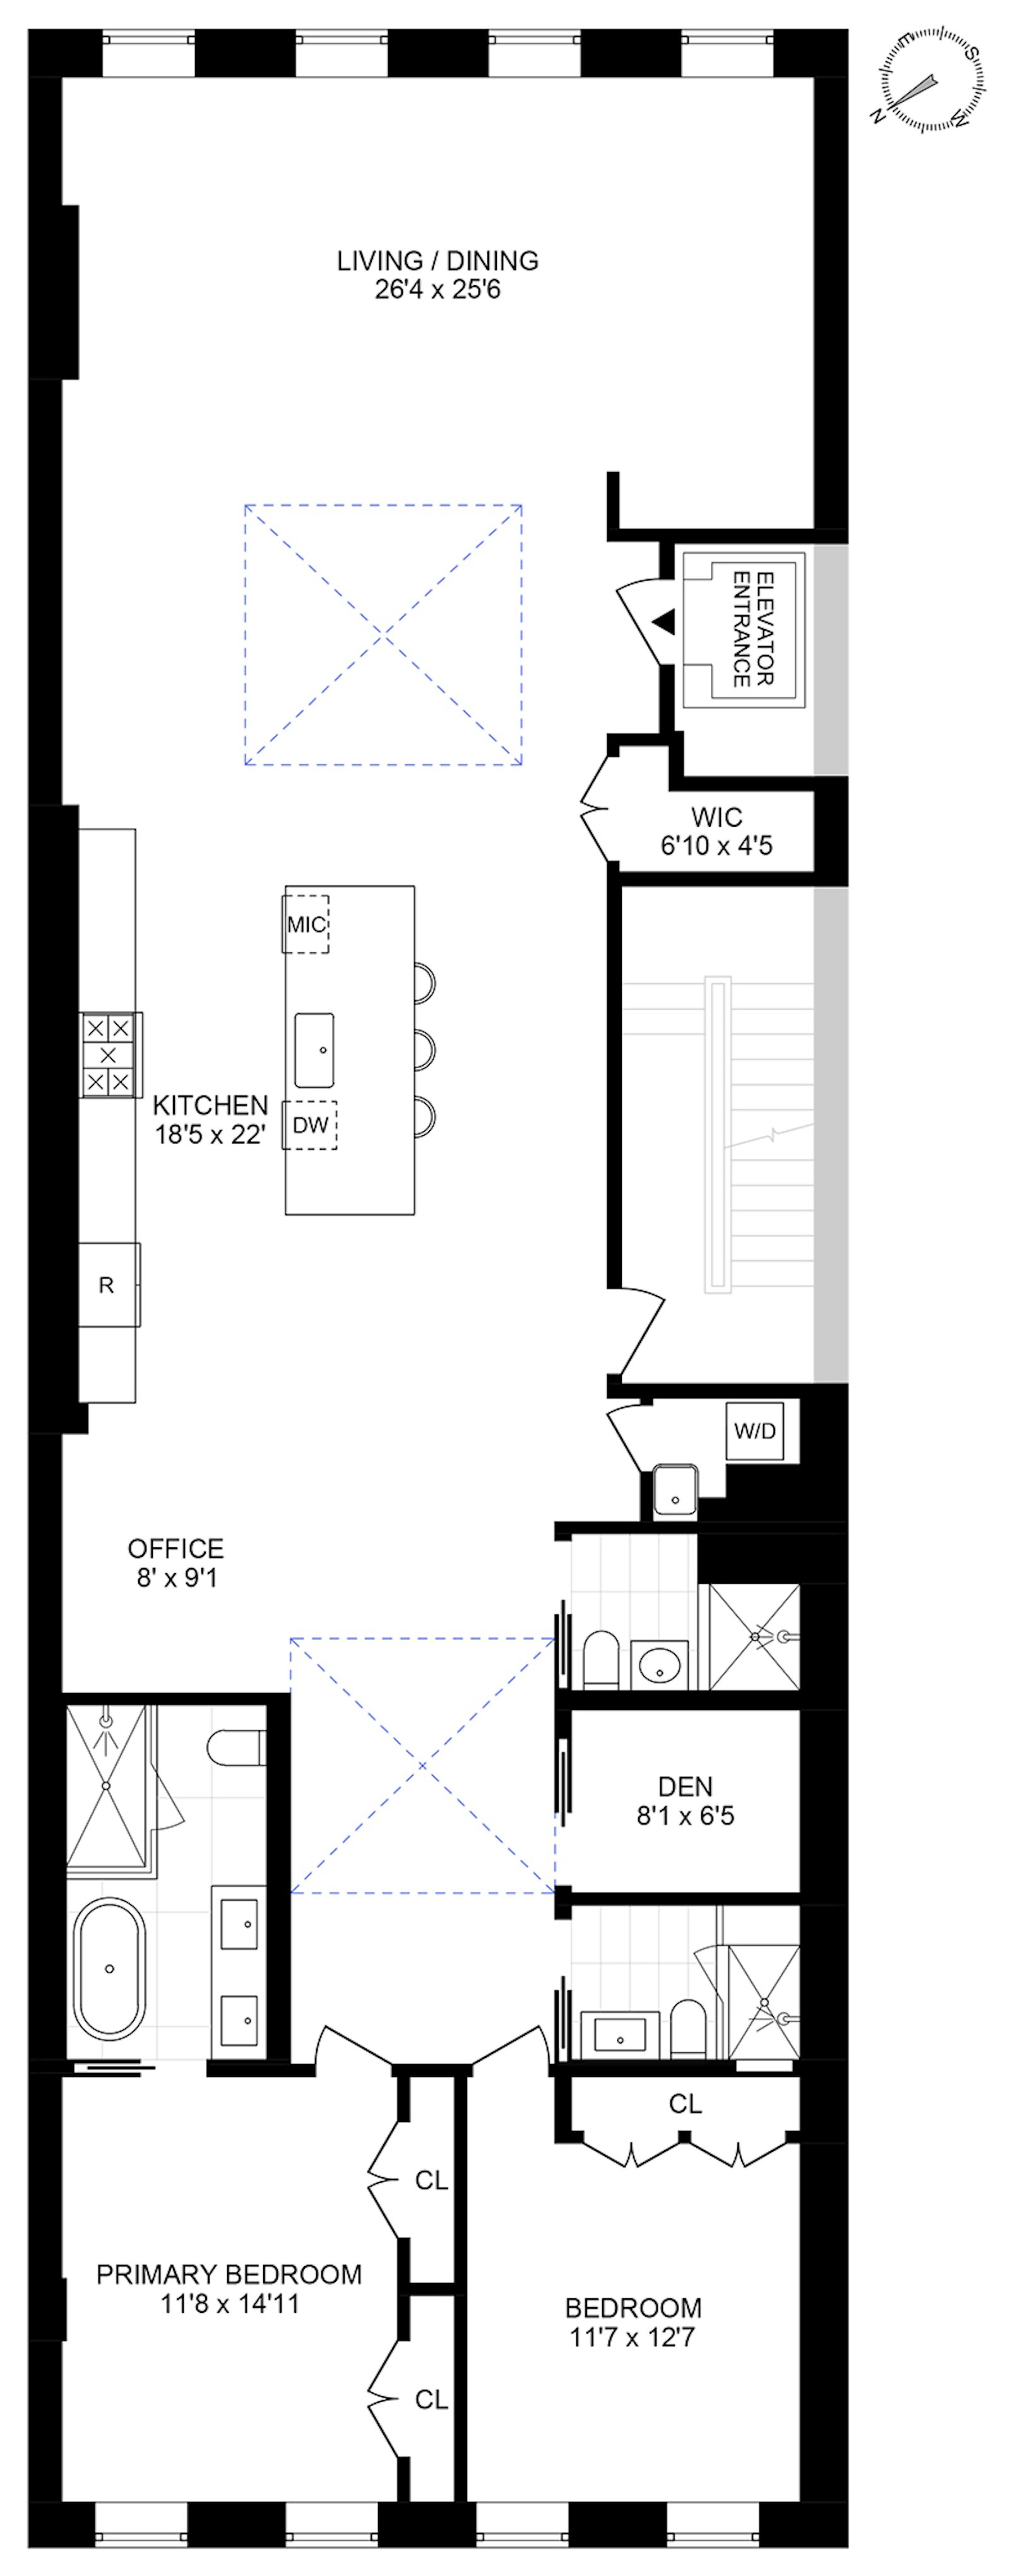 Floorplan for 51 Greene Street, PH6